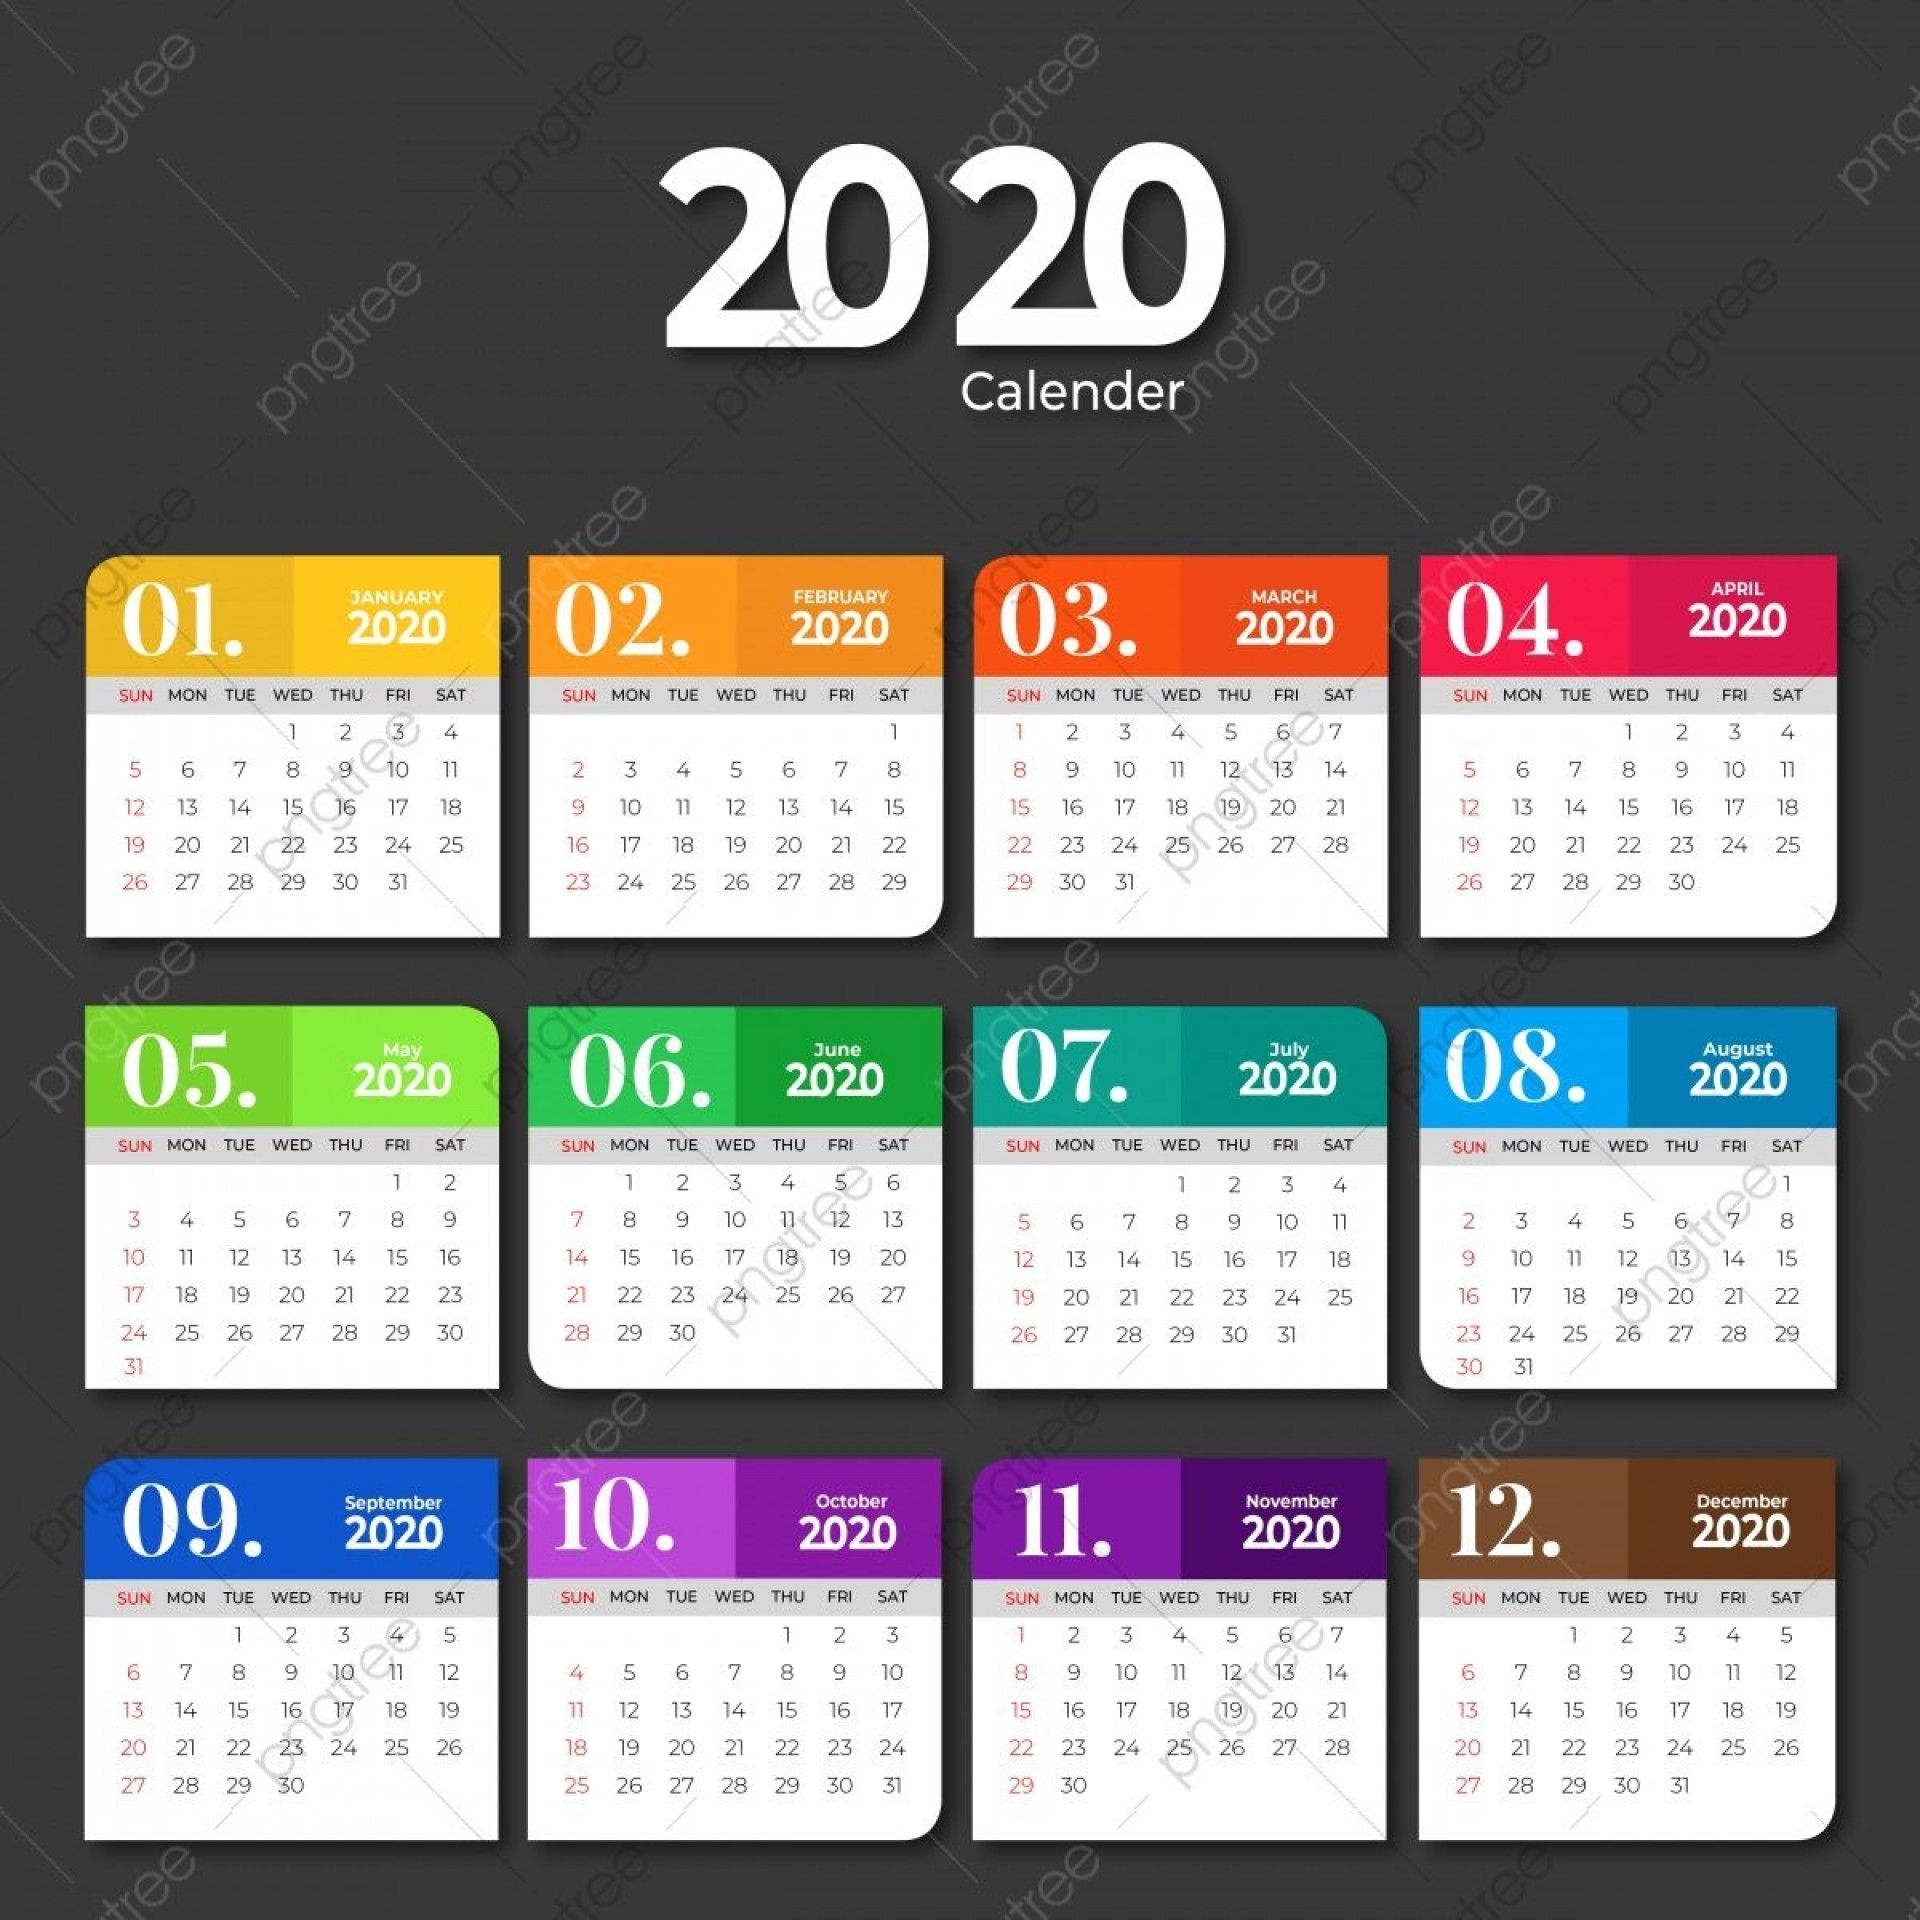 photoshop calendar template 2020 addictionary